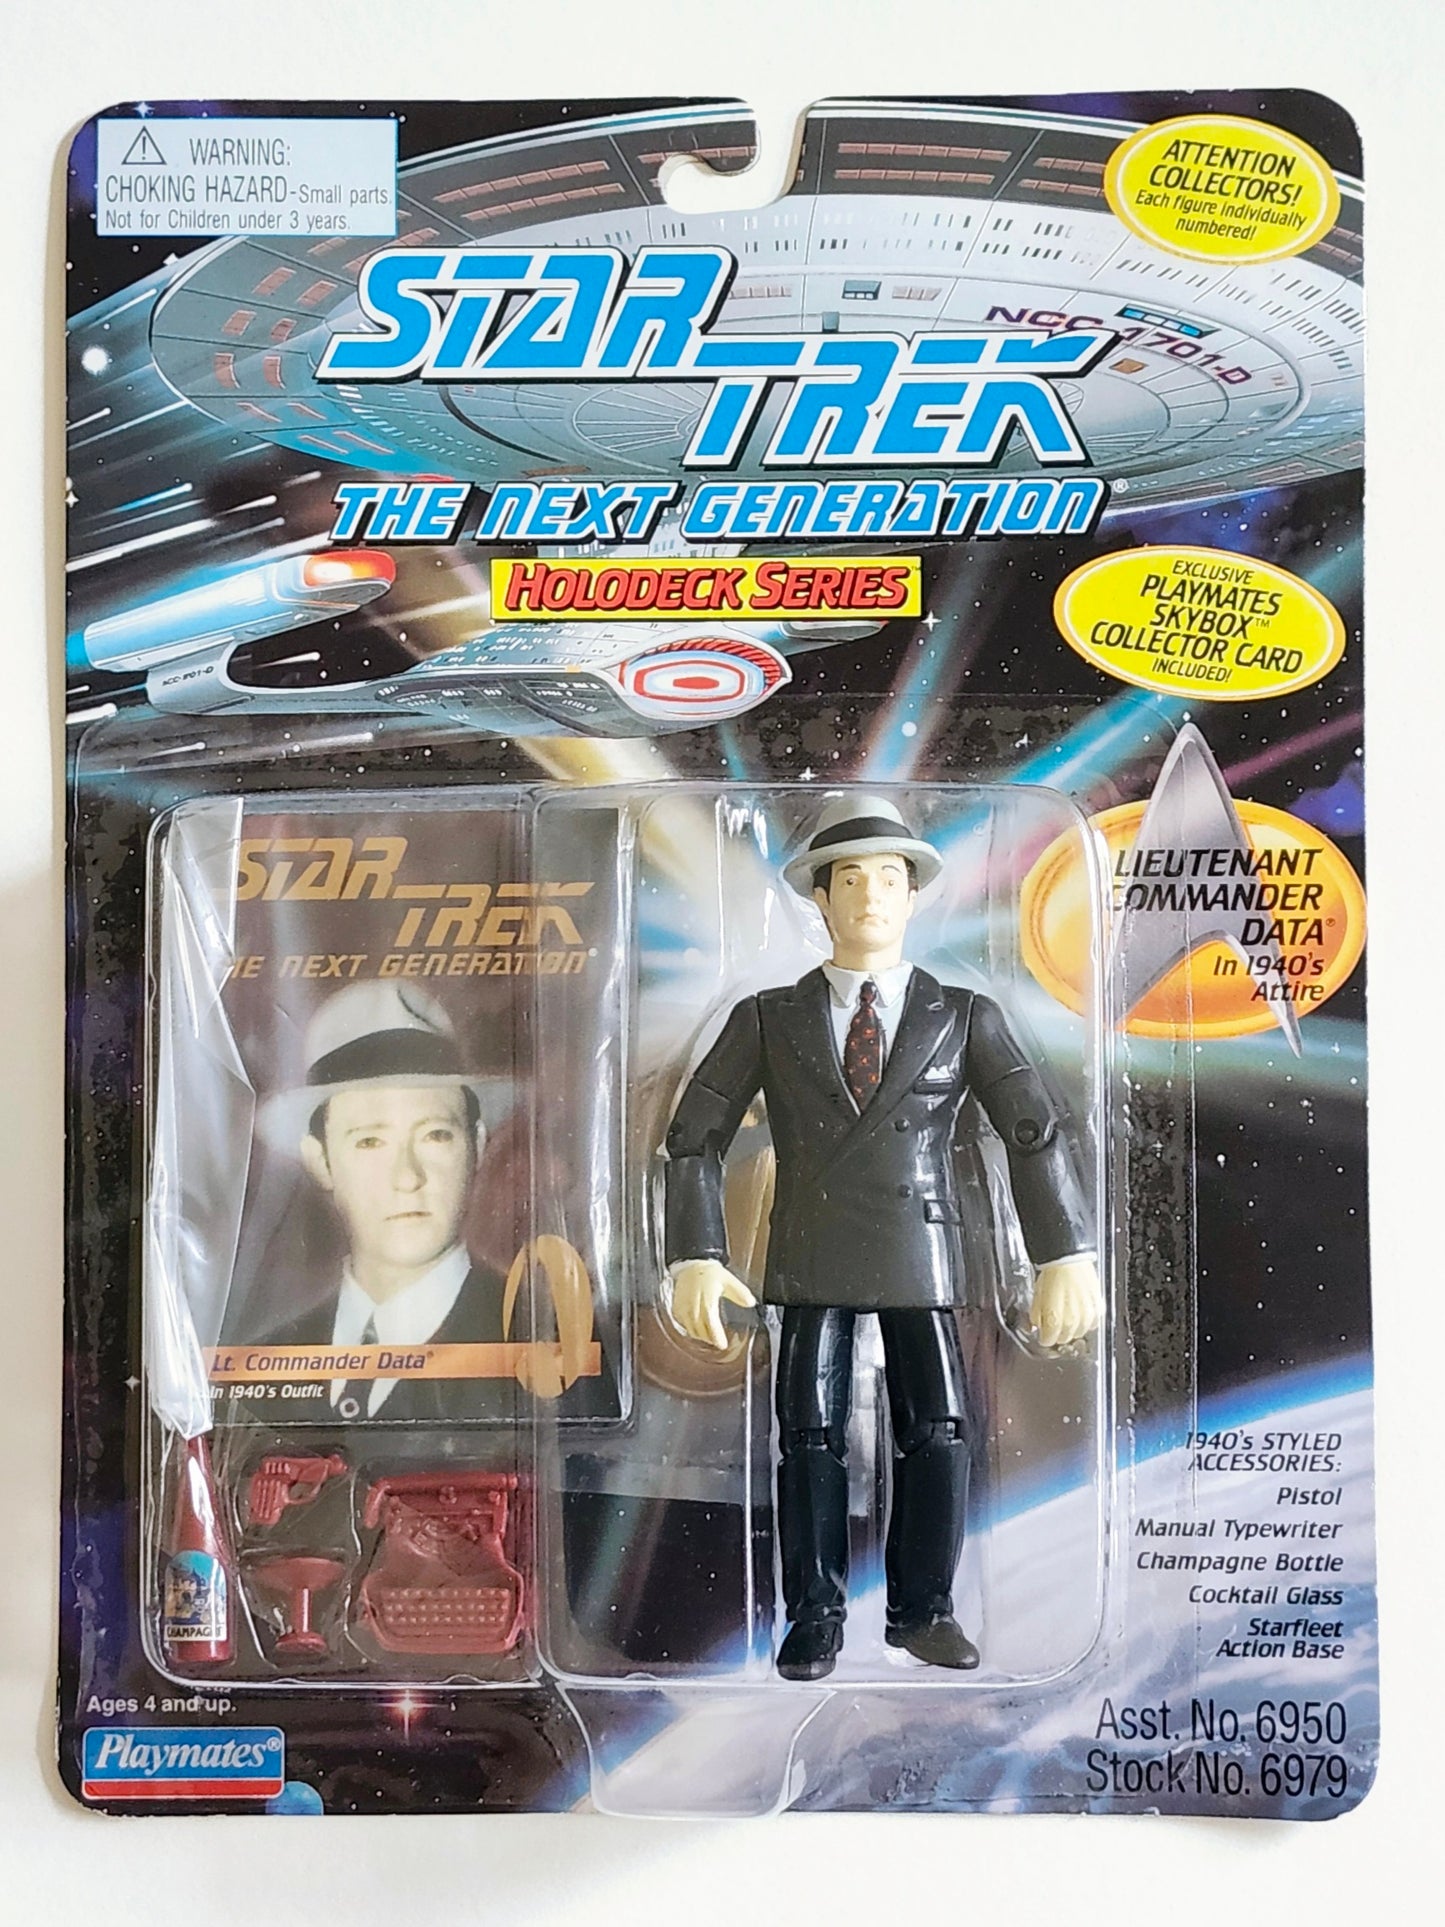 Star Trek: The Next Generation Holodeck Series Lieutenant Commander Data in 1940s Attire Action Figure